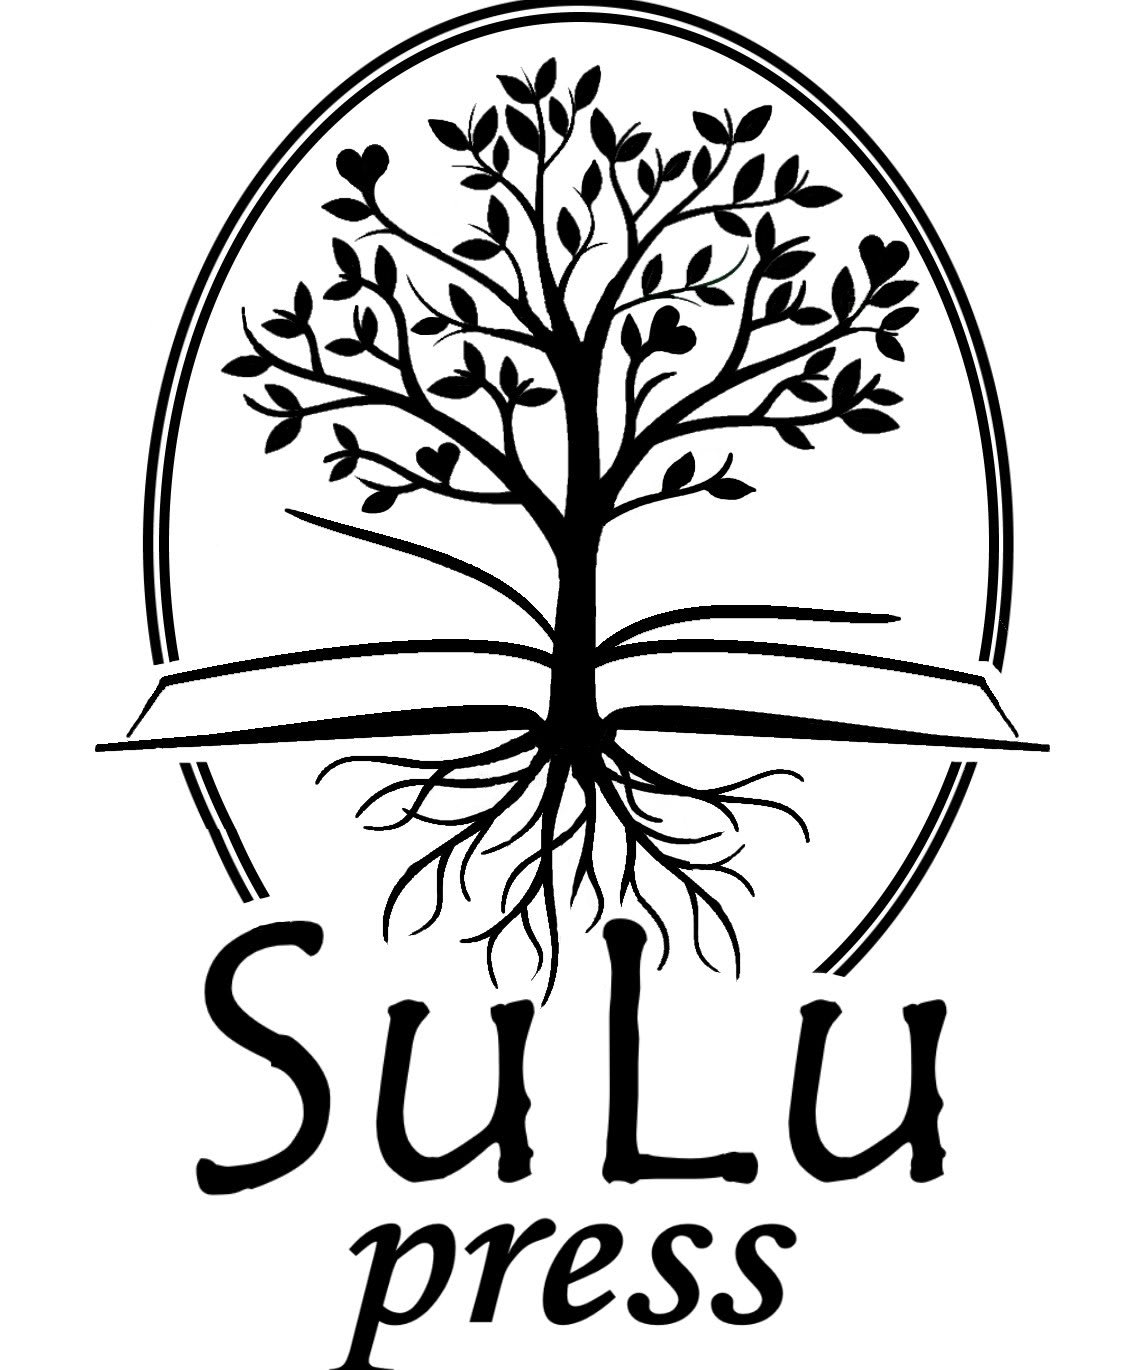 Sulu Press